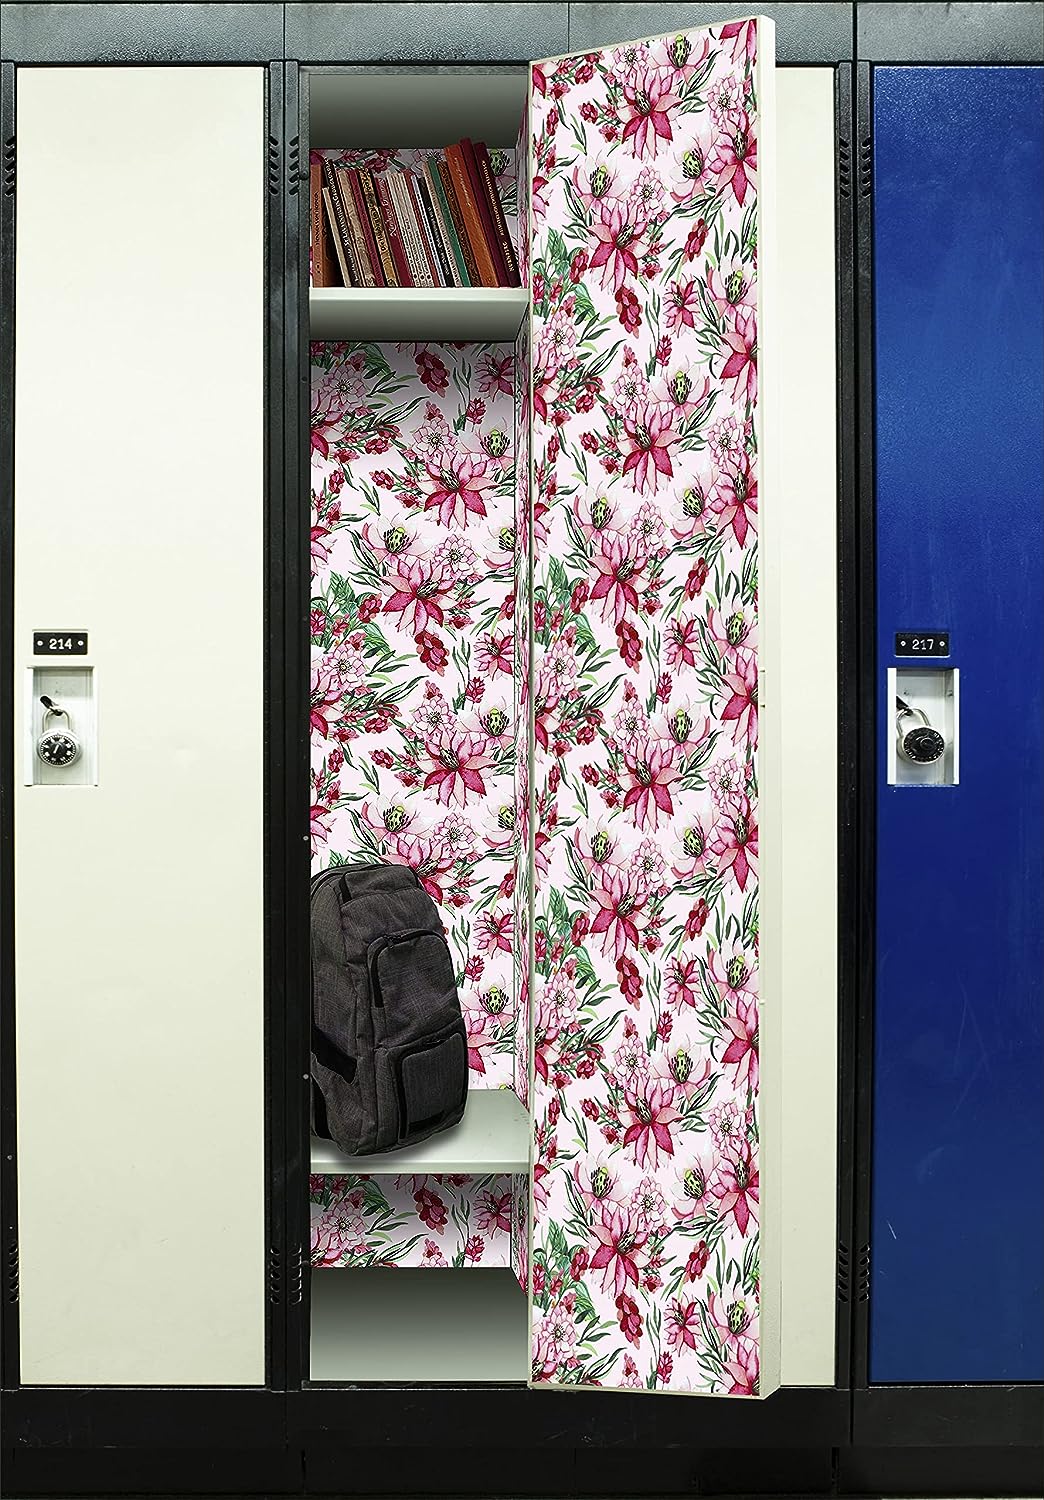 PELICAN INDUSTRIAL Wallpaper - Magnetic School Locker Wallpaper (Full Sheet Magnetic) - Flowers - Pack of 3 Sheets - vr20